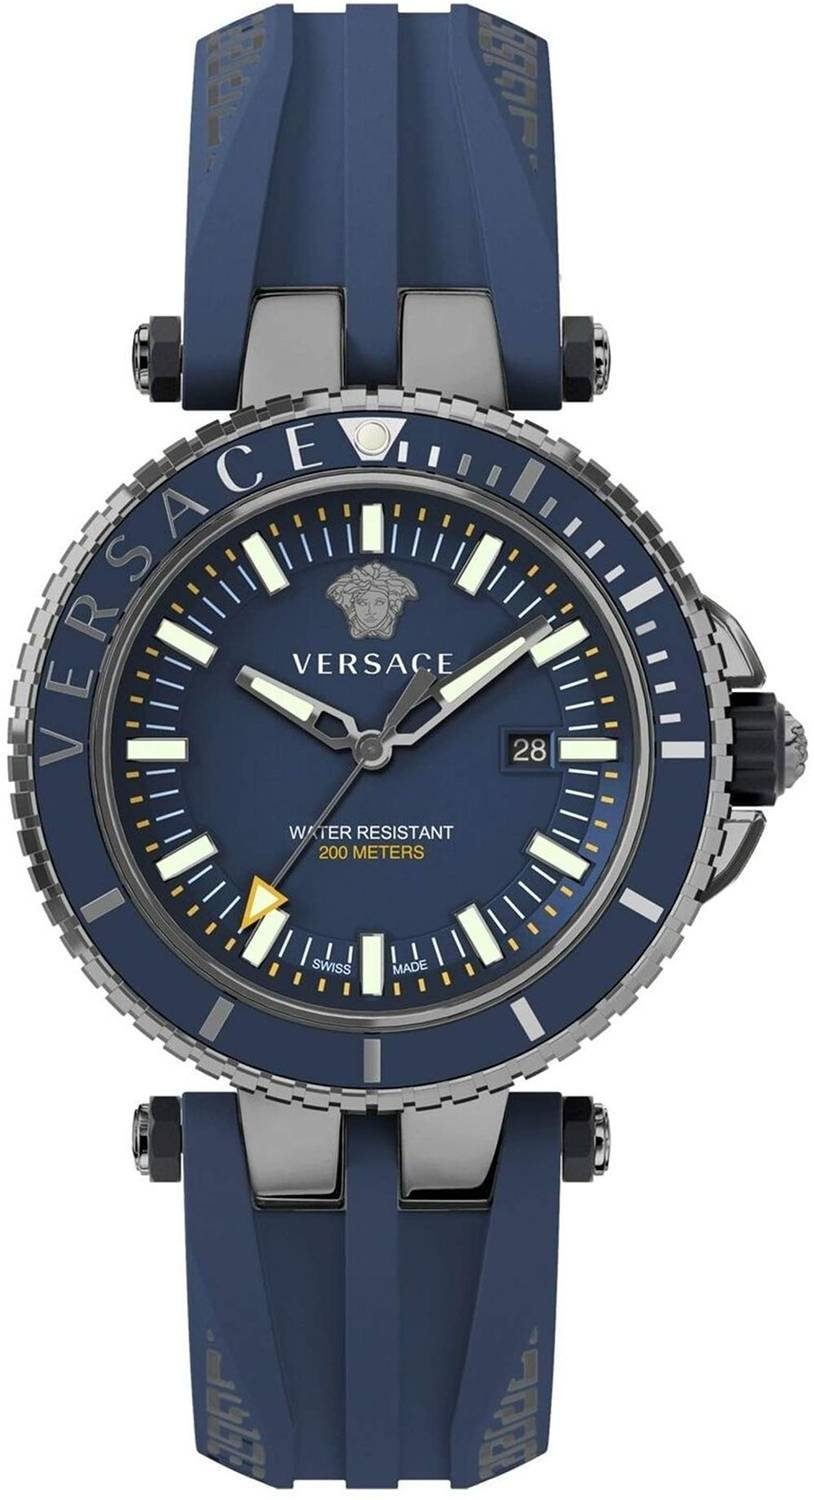 Versace Schweizer Uhr V-Race Diver